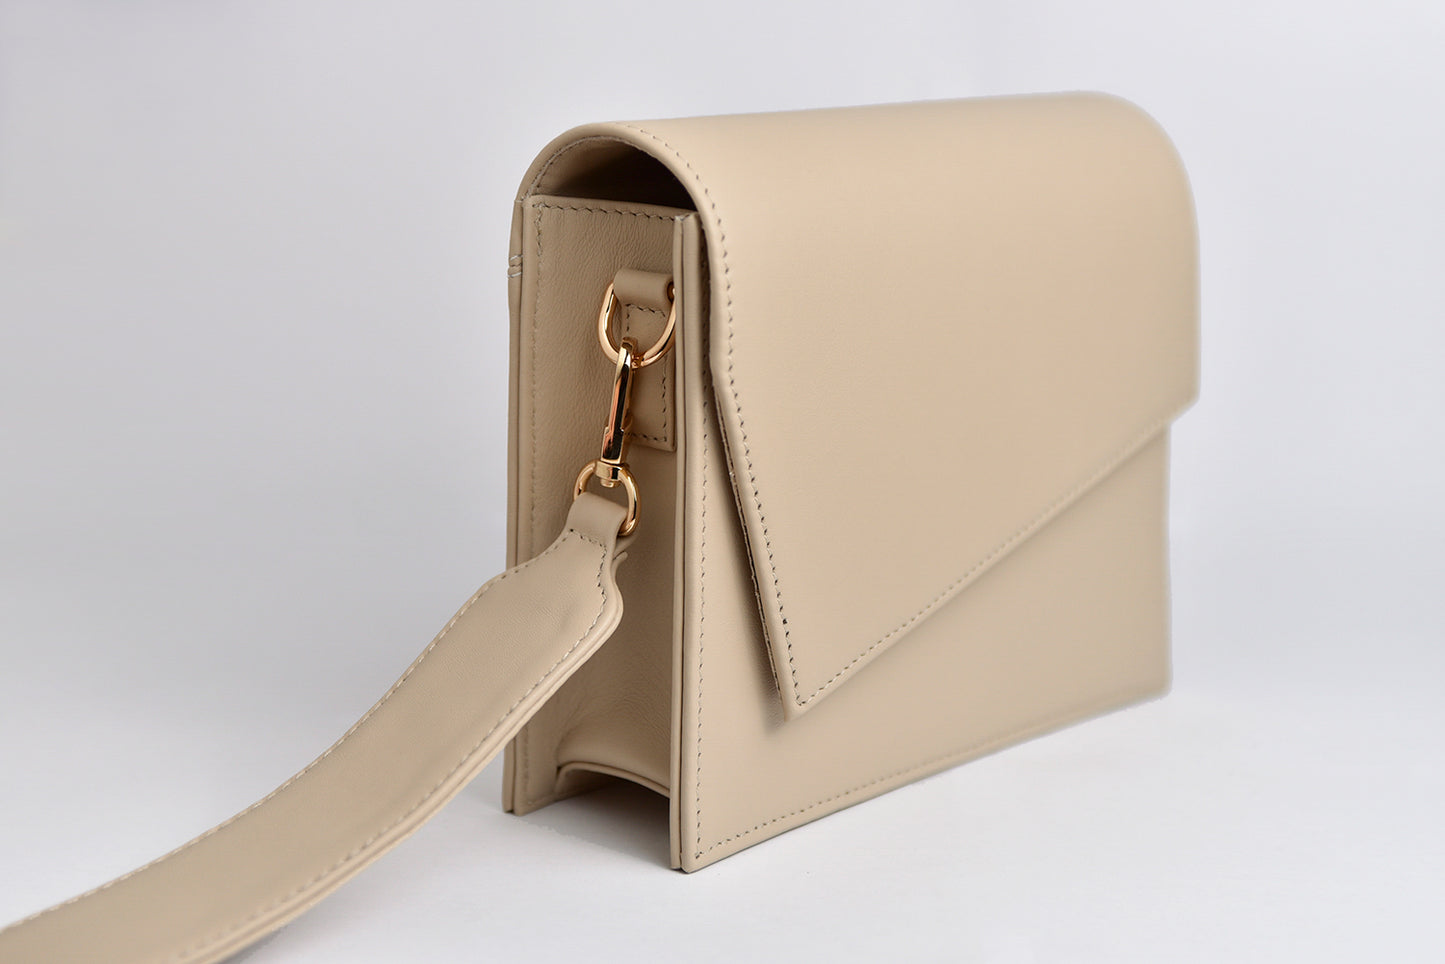 Beige leather clutch handbag